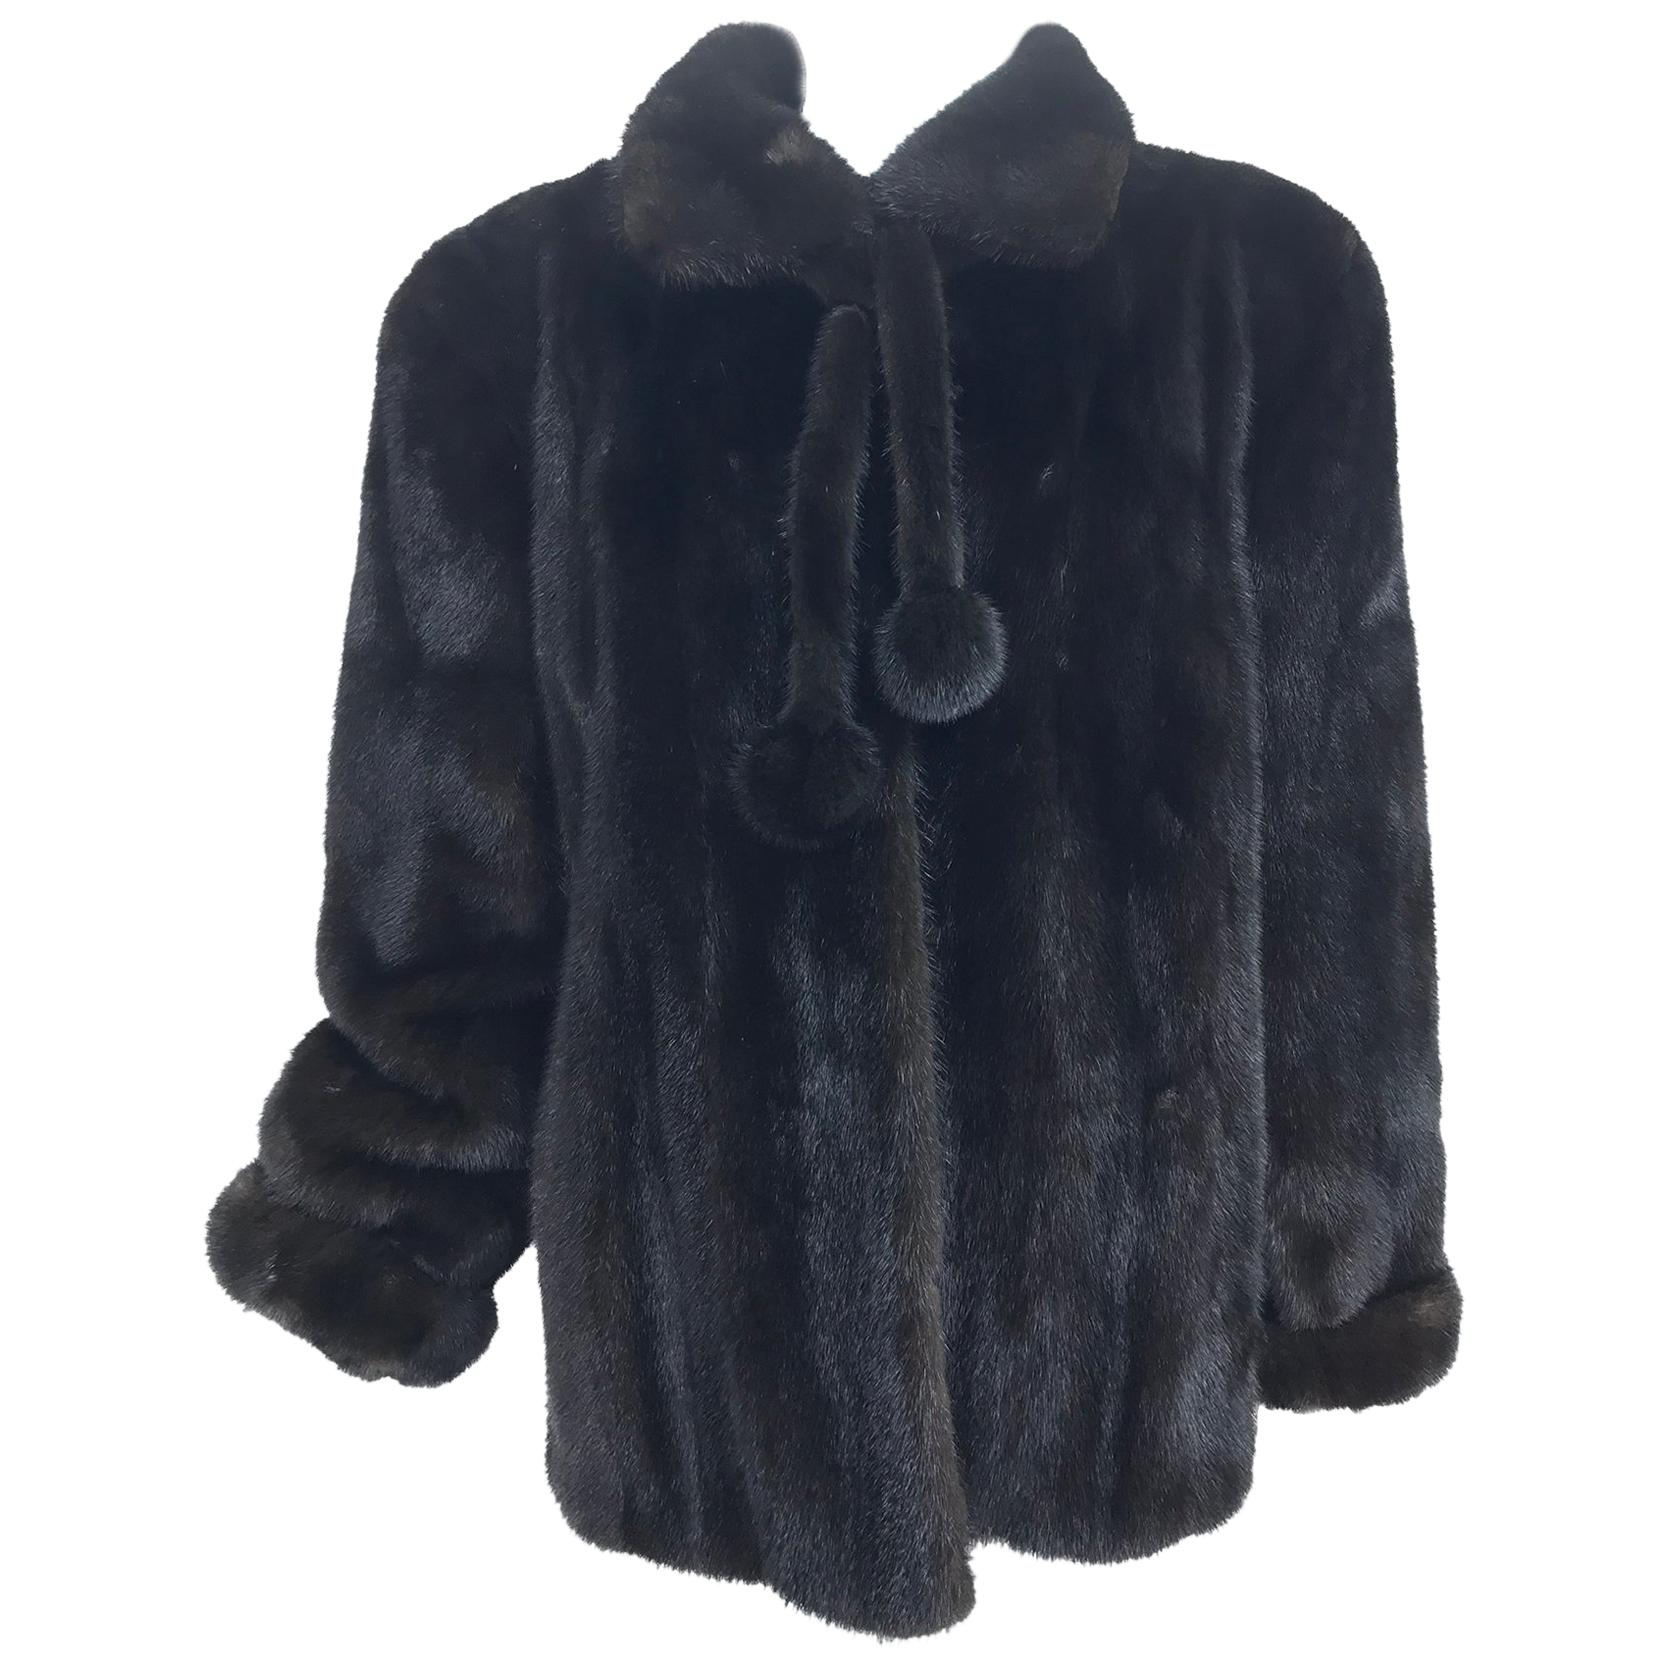 Nieman Marcus Black Mink Fur Jacket with Pom Pom Ties